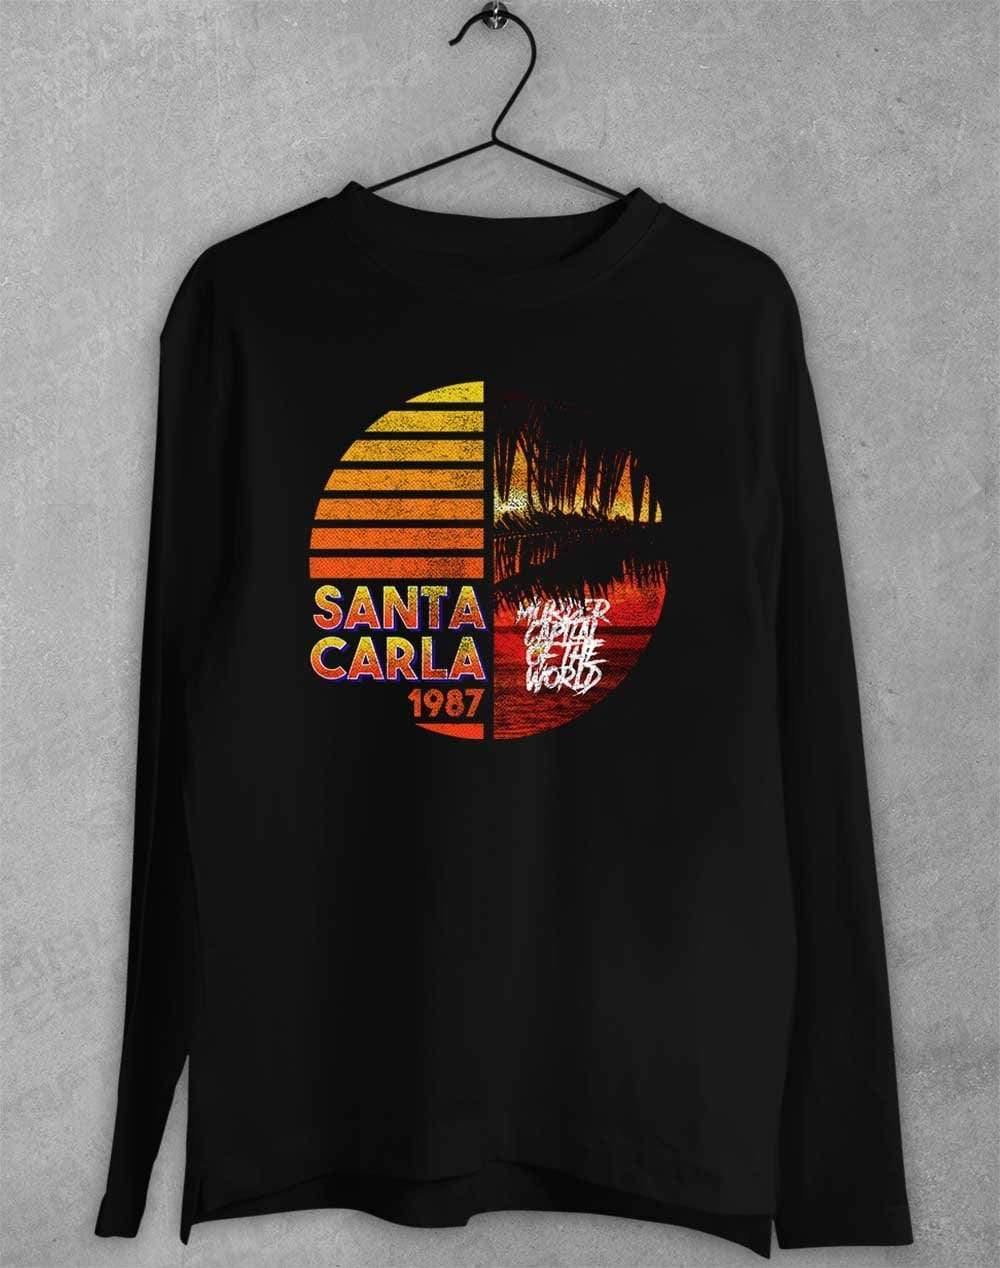 Santa Carla 1987 - Long Sleeve T-Shirt S / Black  - Off World Tees